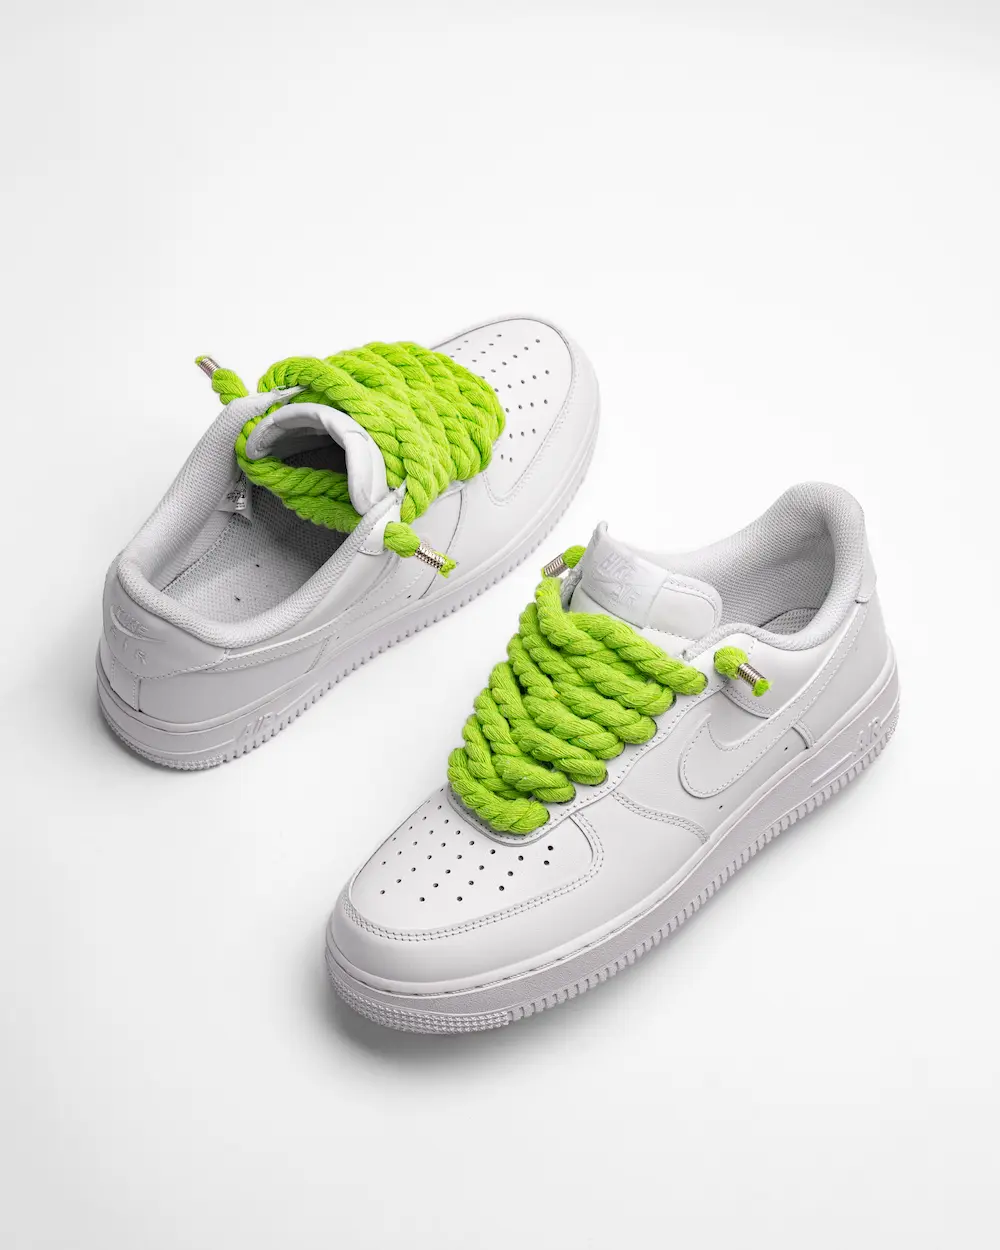 Nike Air Force 1 bianca personalizzata con lacci in corda verde lime